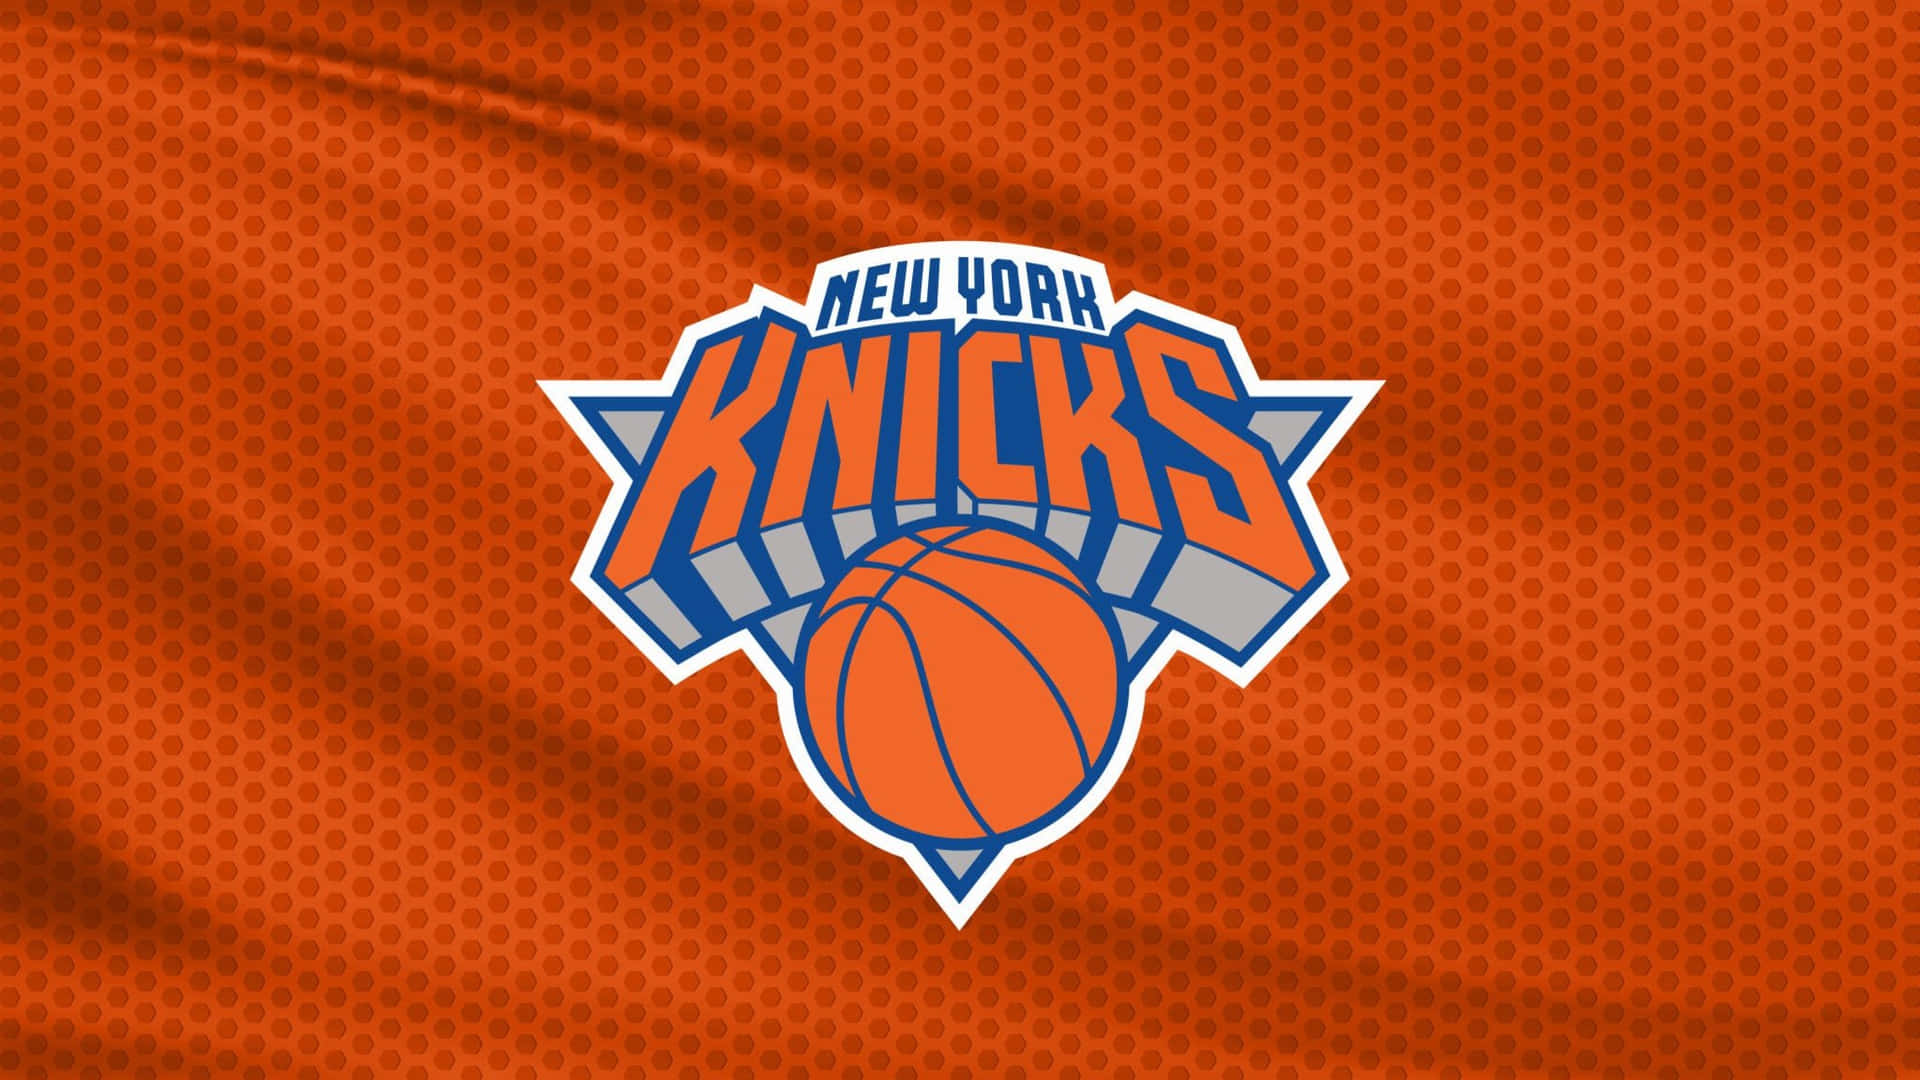 Ellogo De Los New York Knicks En Un Fondo Naranja Fondo de pantalla